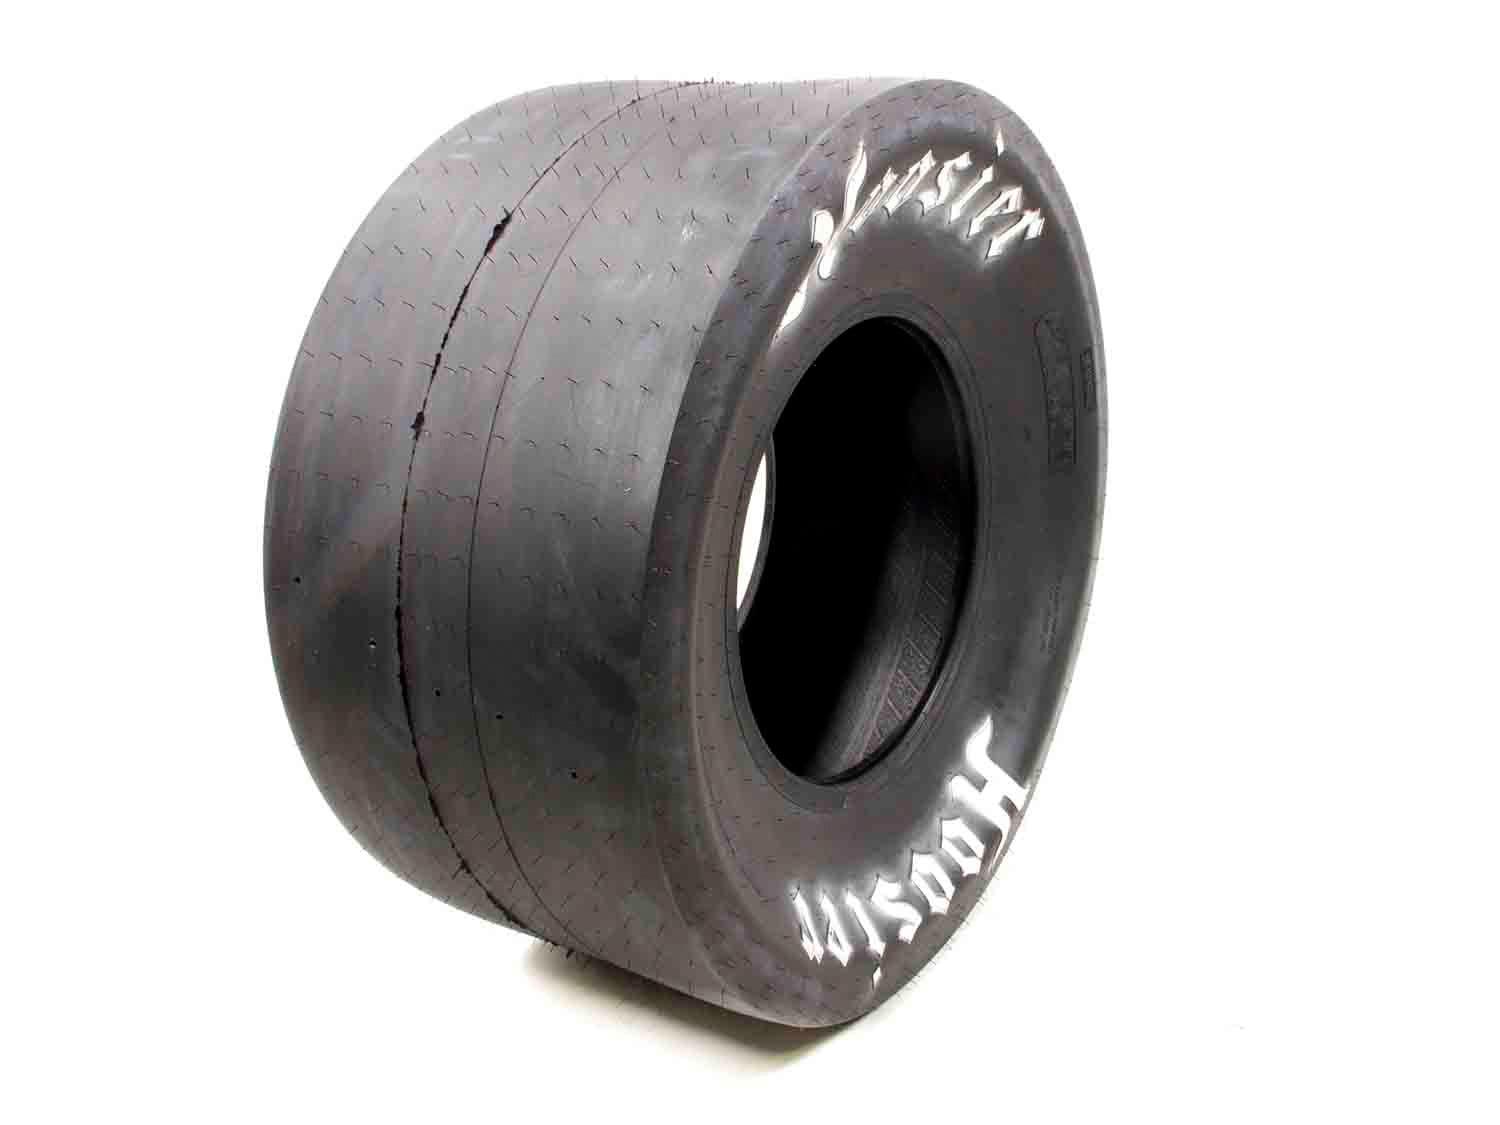 28.0/10.5-15 Drag Tire - Burlile Performance Products